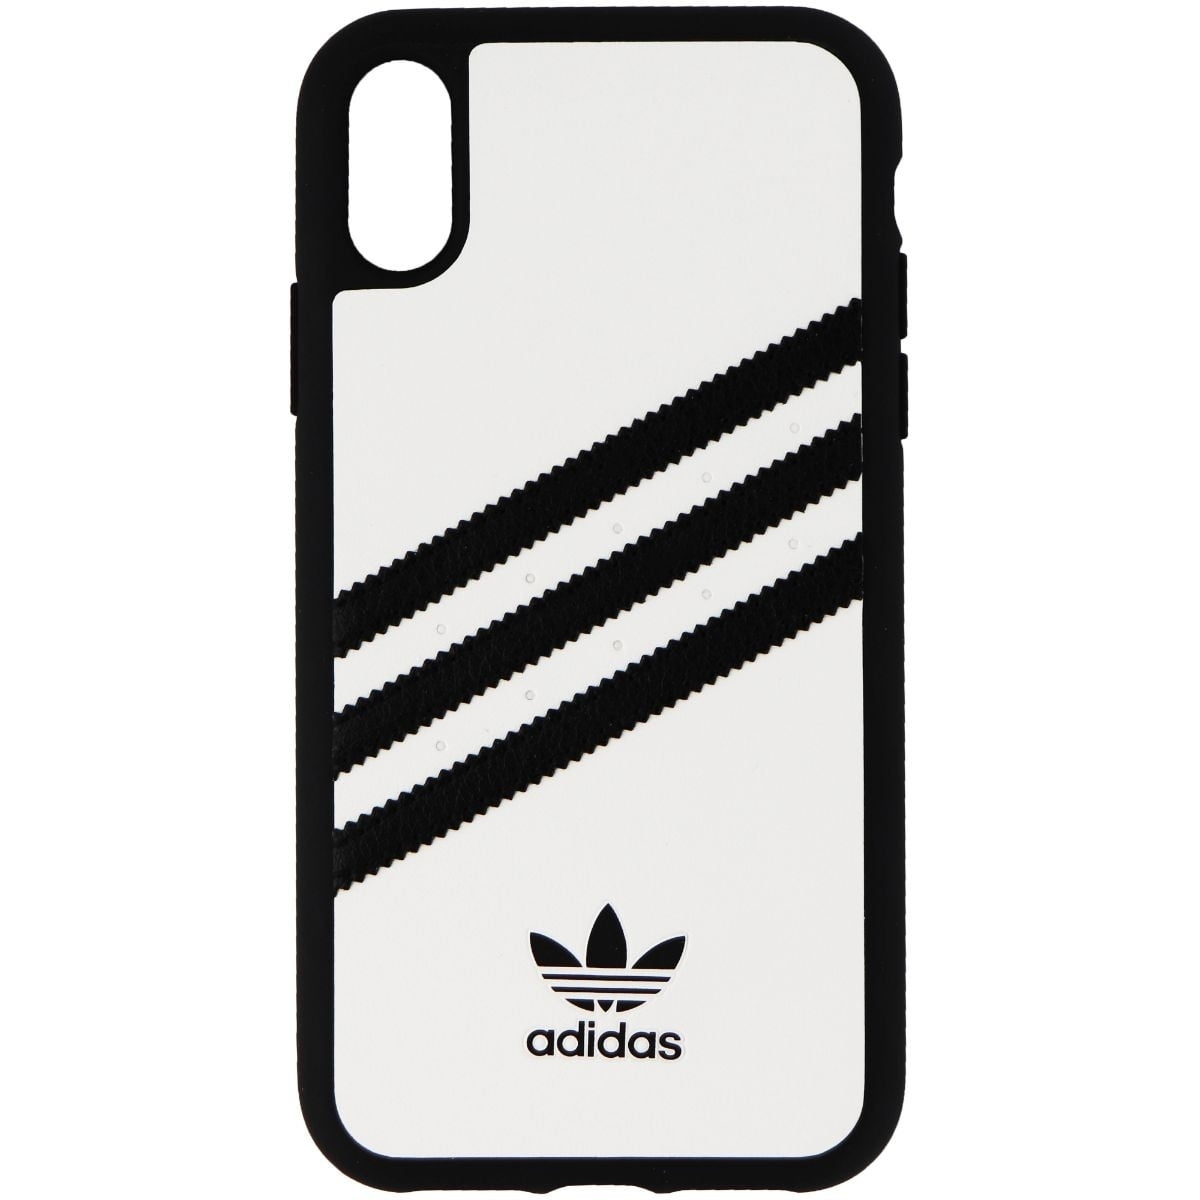 aluminium constant Dank u voor uw hulp Adidas Originals Samba Snap Case for iPhone XR - White w/ Black Stripes -  Walmart.com